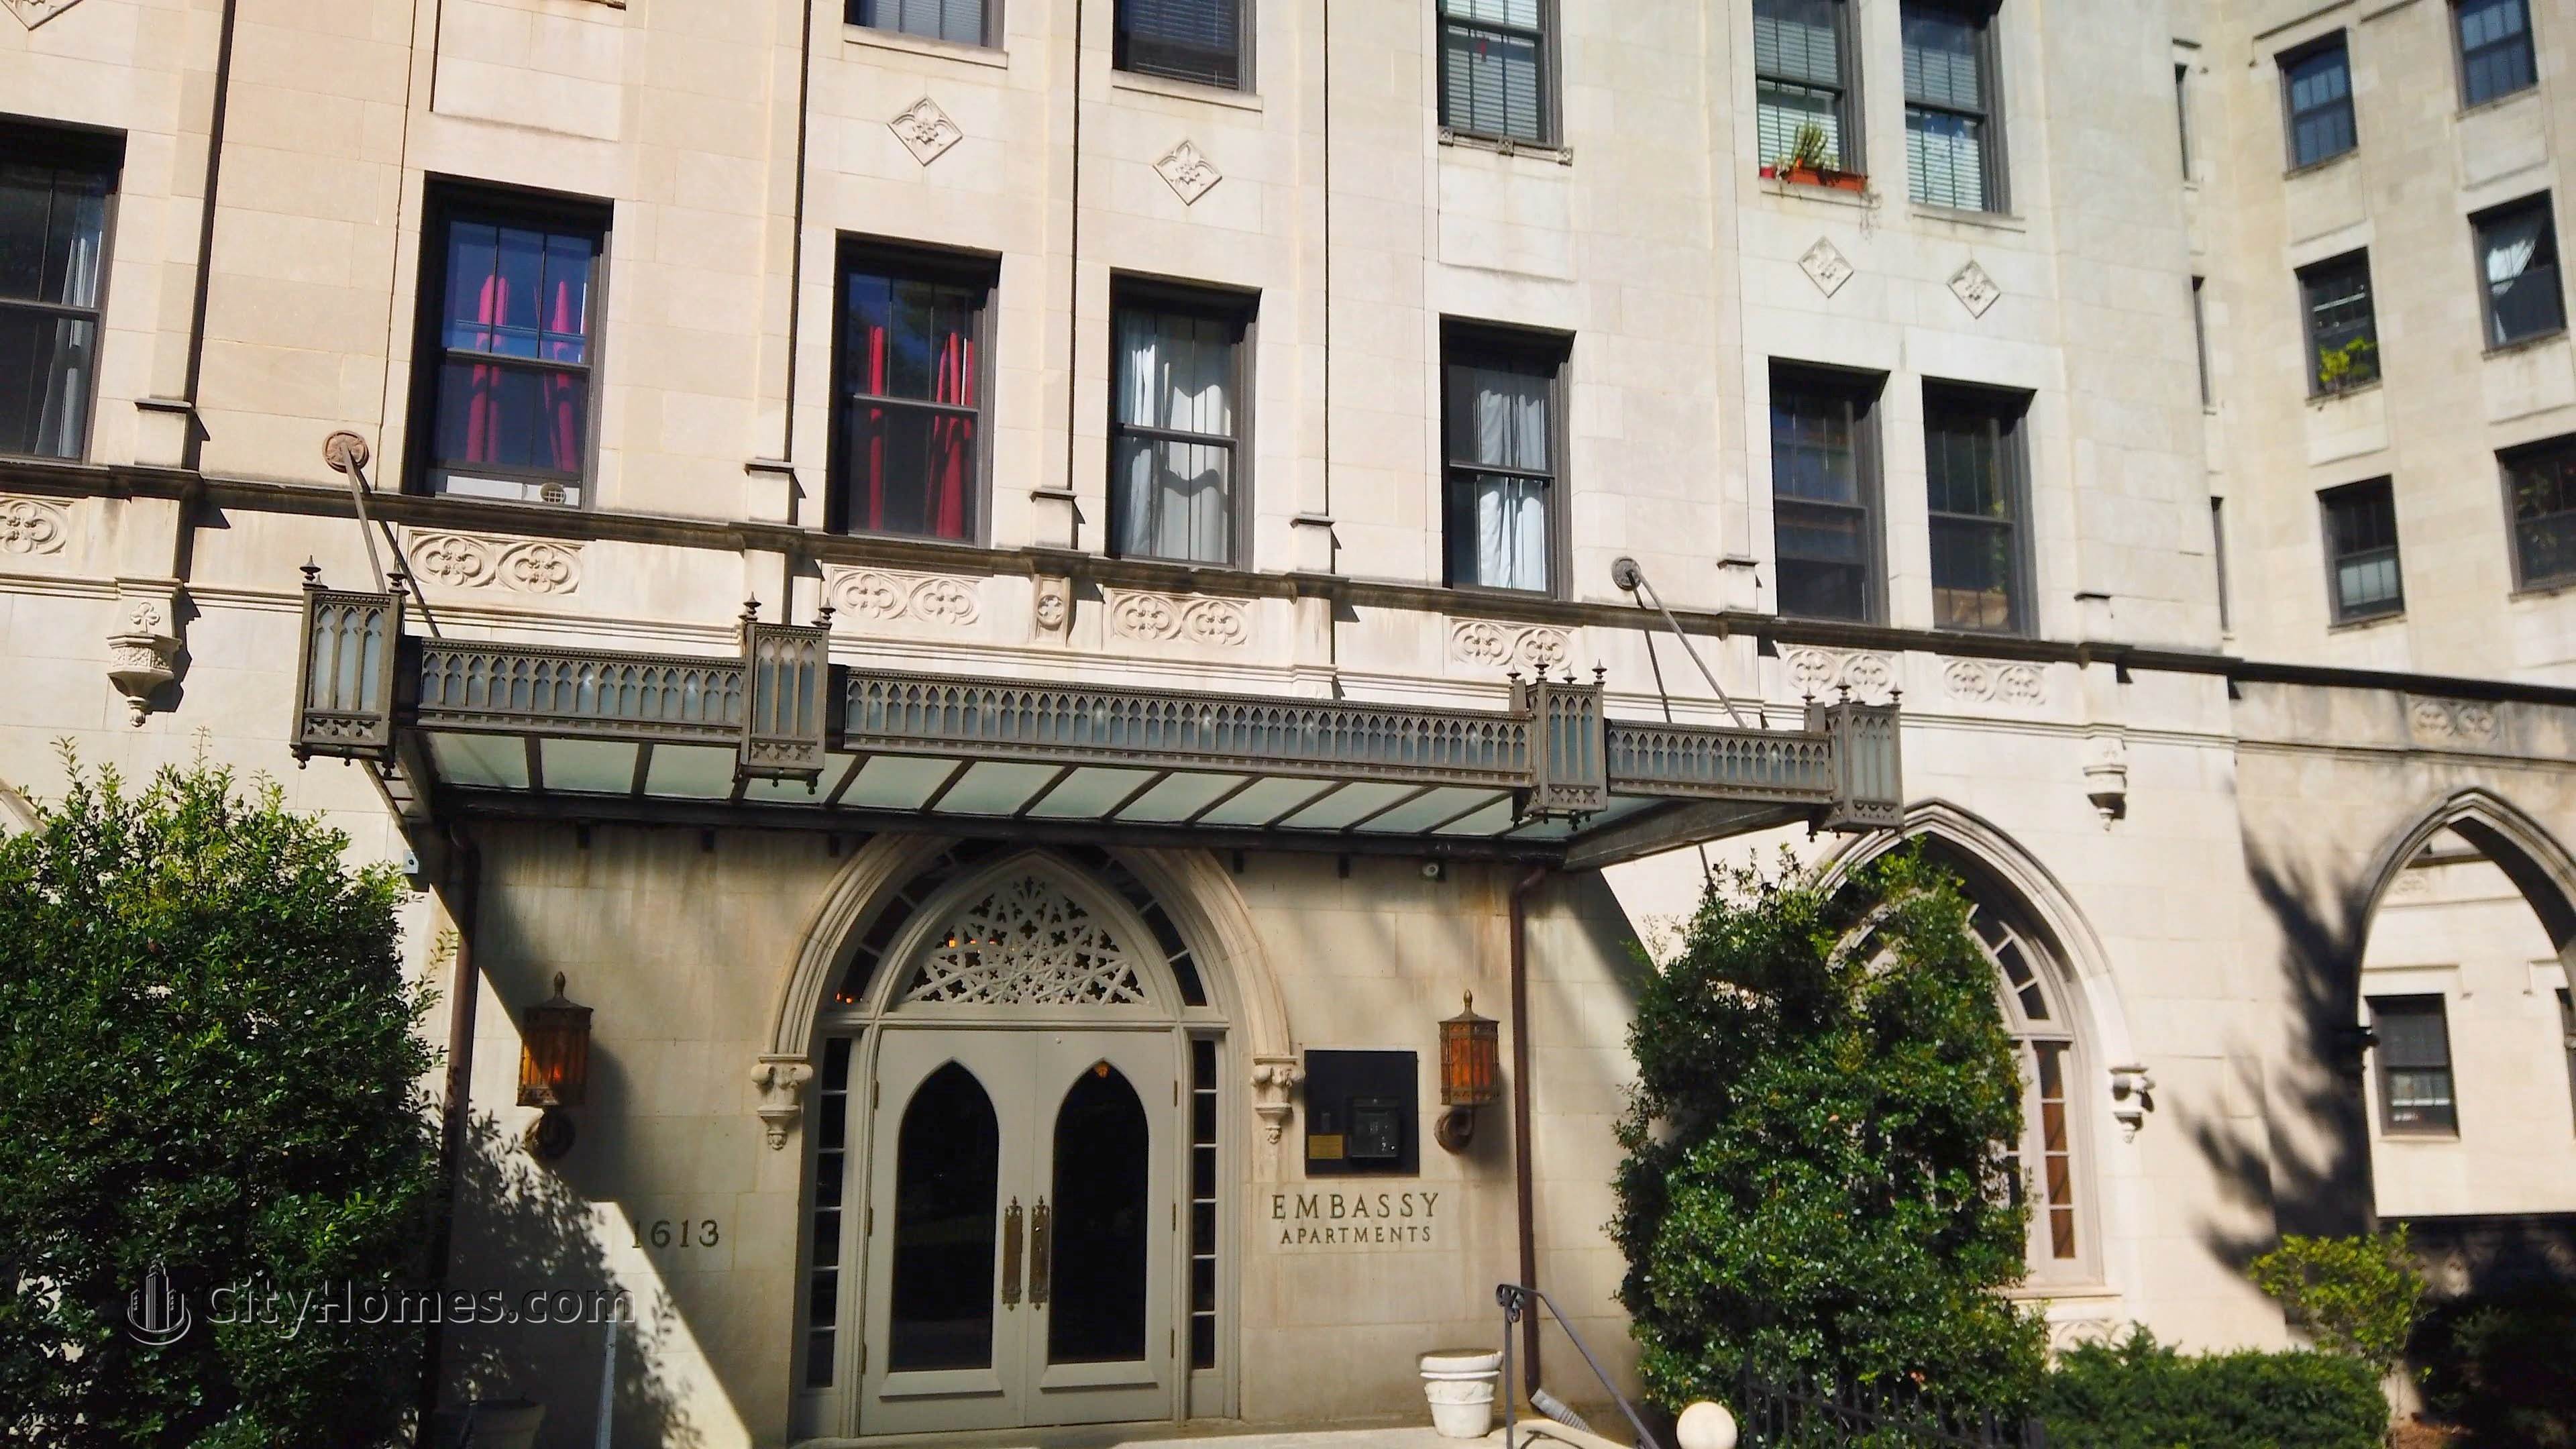 The Embassy bâtiment à 1613 Harvard St NW, Mount Pleasant, Washington, DC 20009